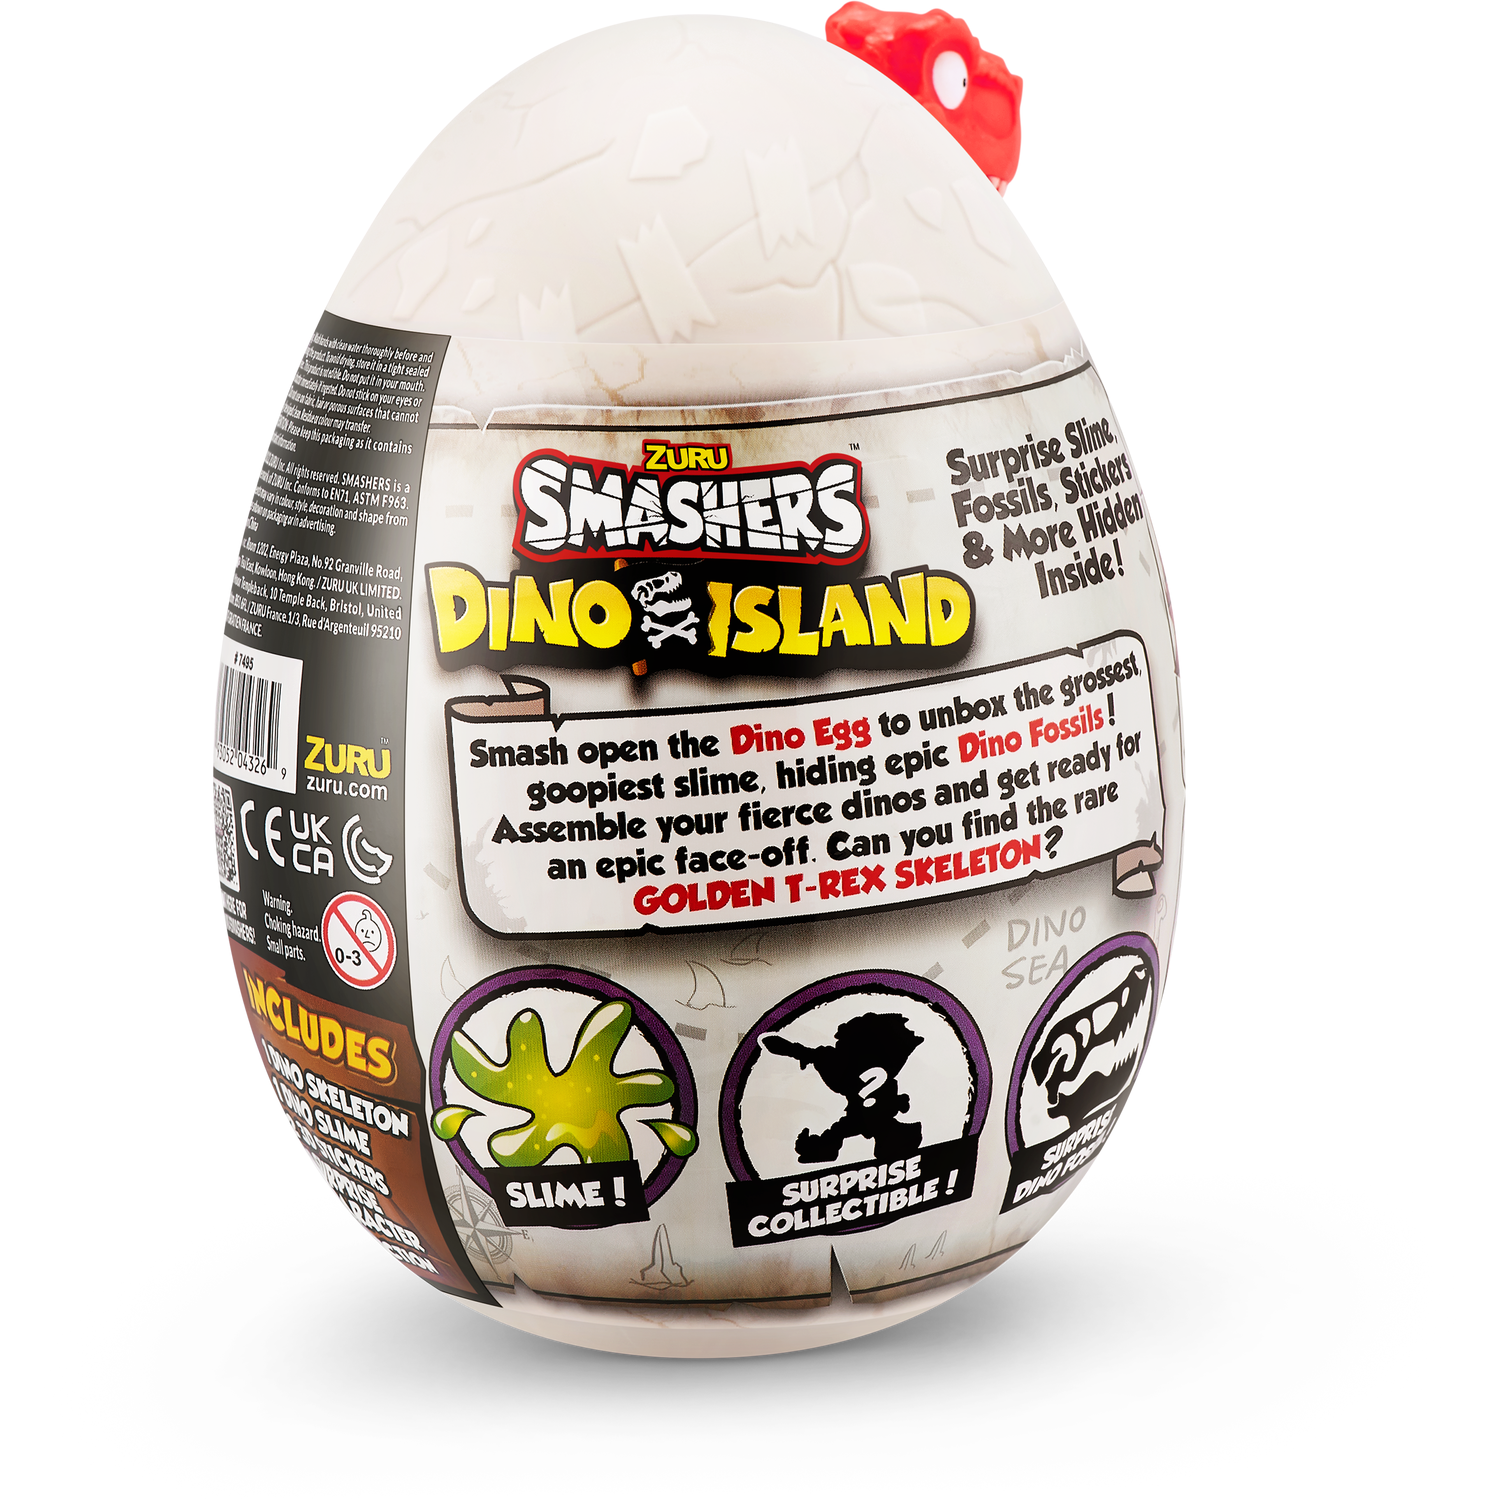 Single Zuru Smashers Dino Island Egg in Assorted styles Image 3